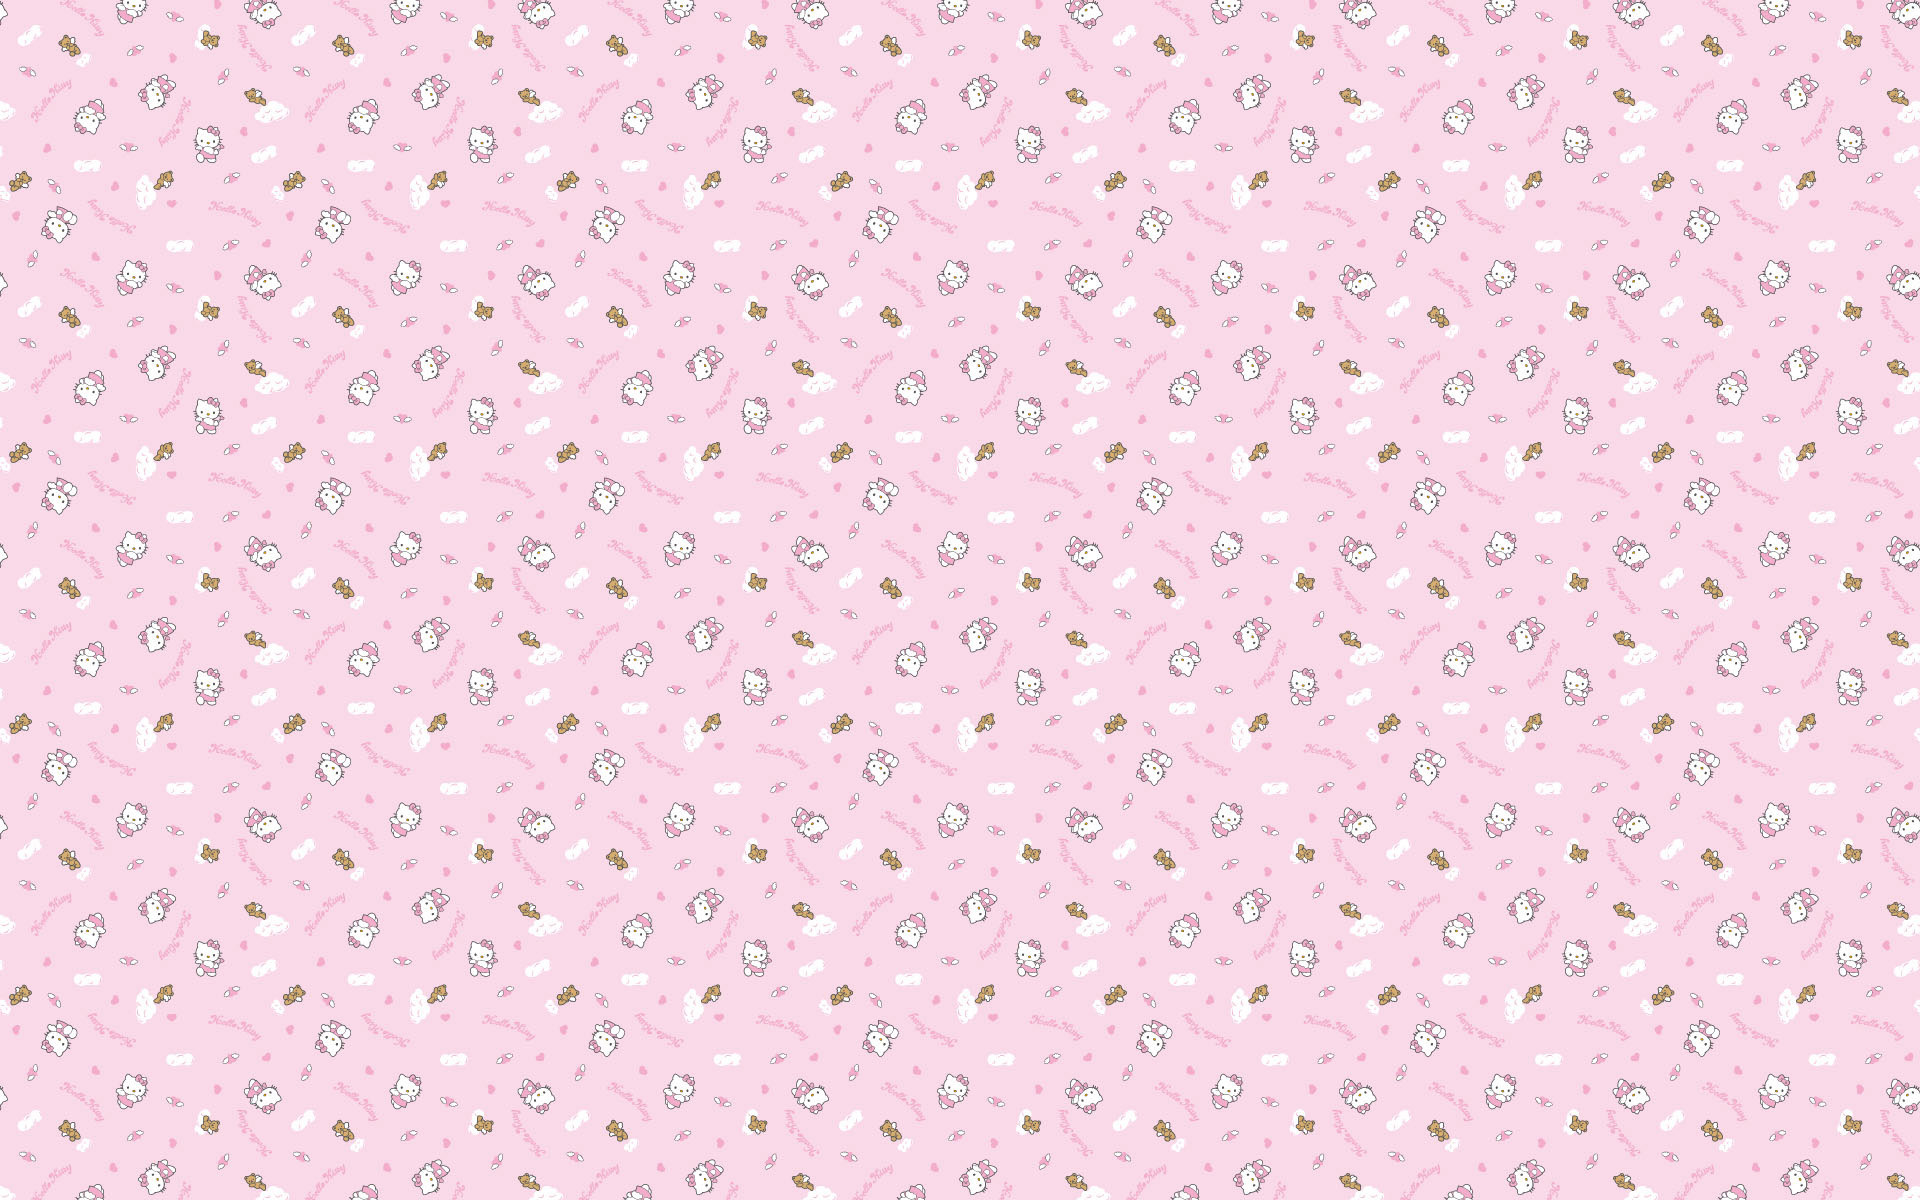  hello kitty wallpaper hello kitty hello kitty wallpaper pink